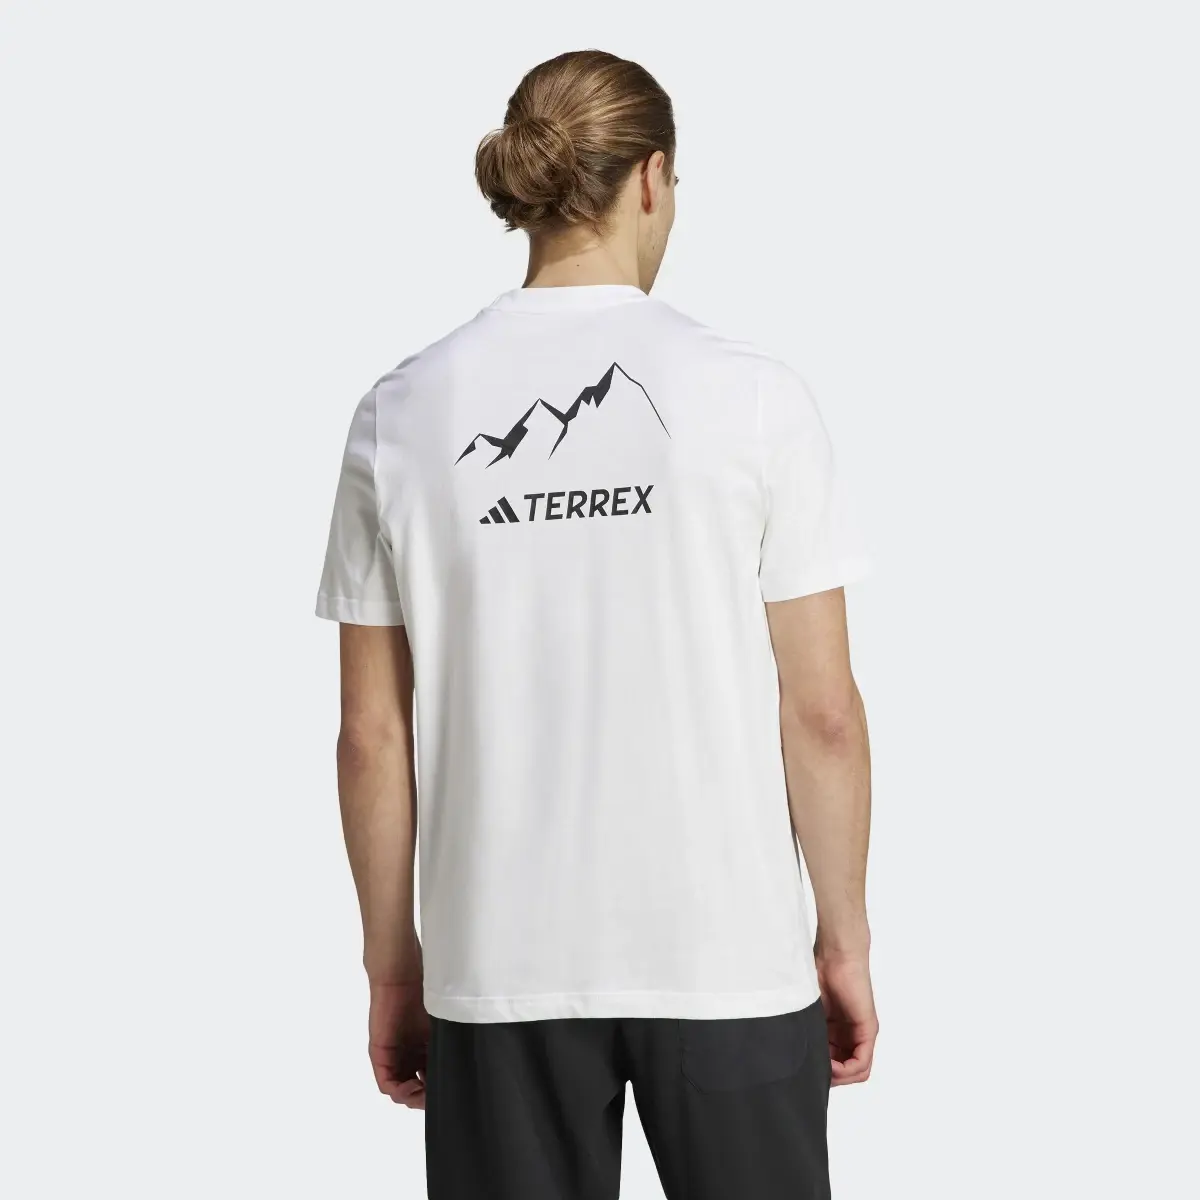 Adidas T-shirt MTN 2.0 TERREX. 3